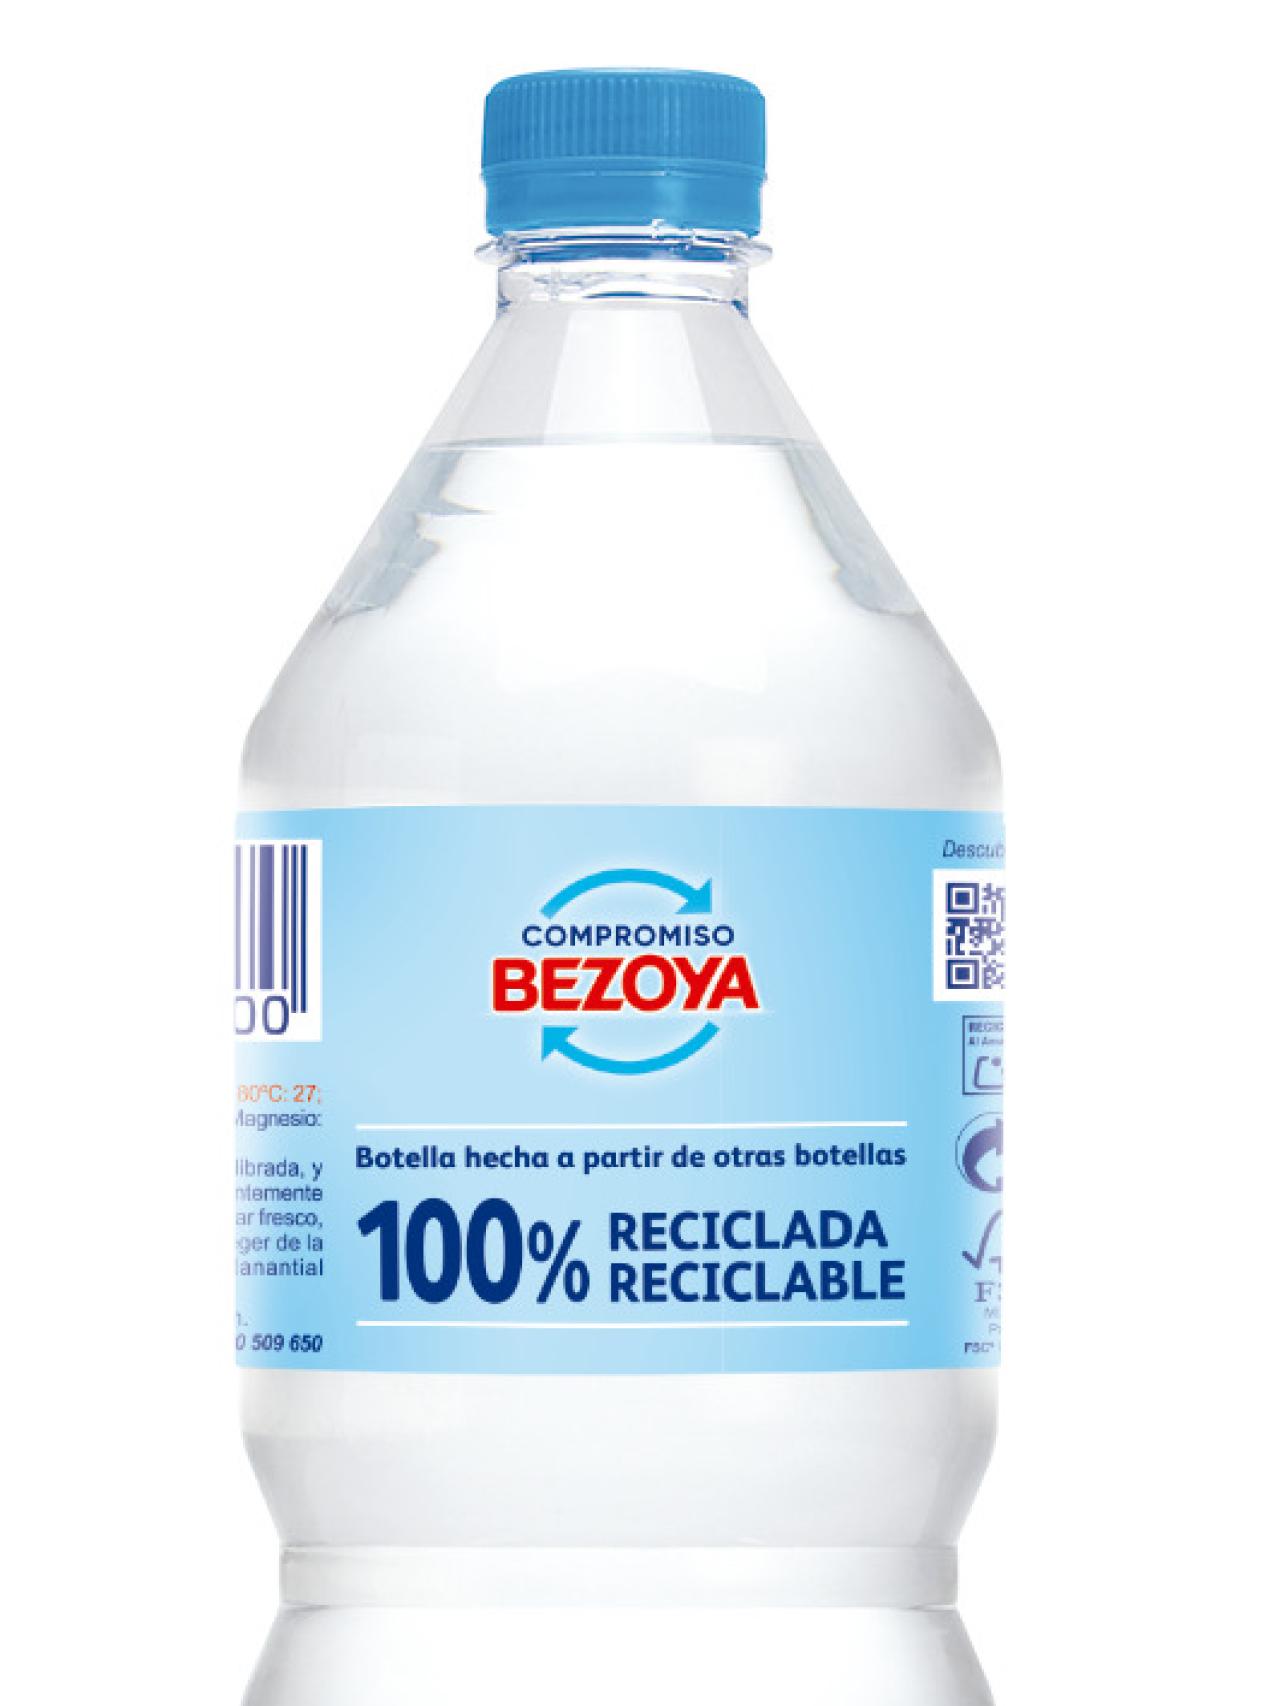 Bezoya - No solo utilizamos un 60% menos de plástico por cada